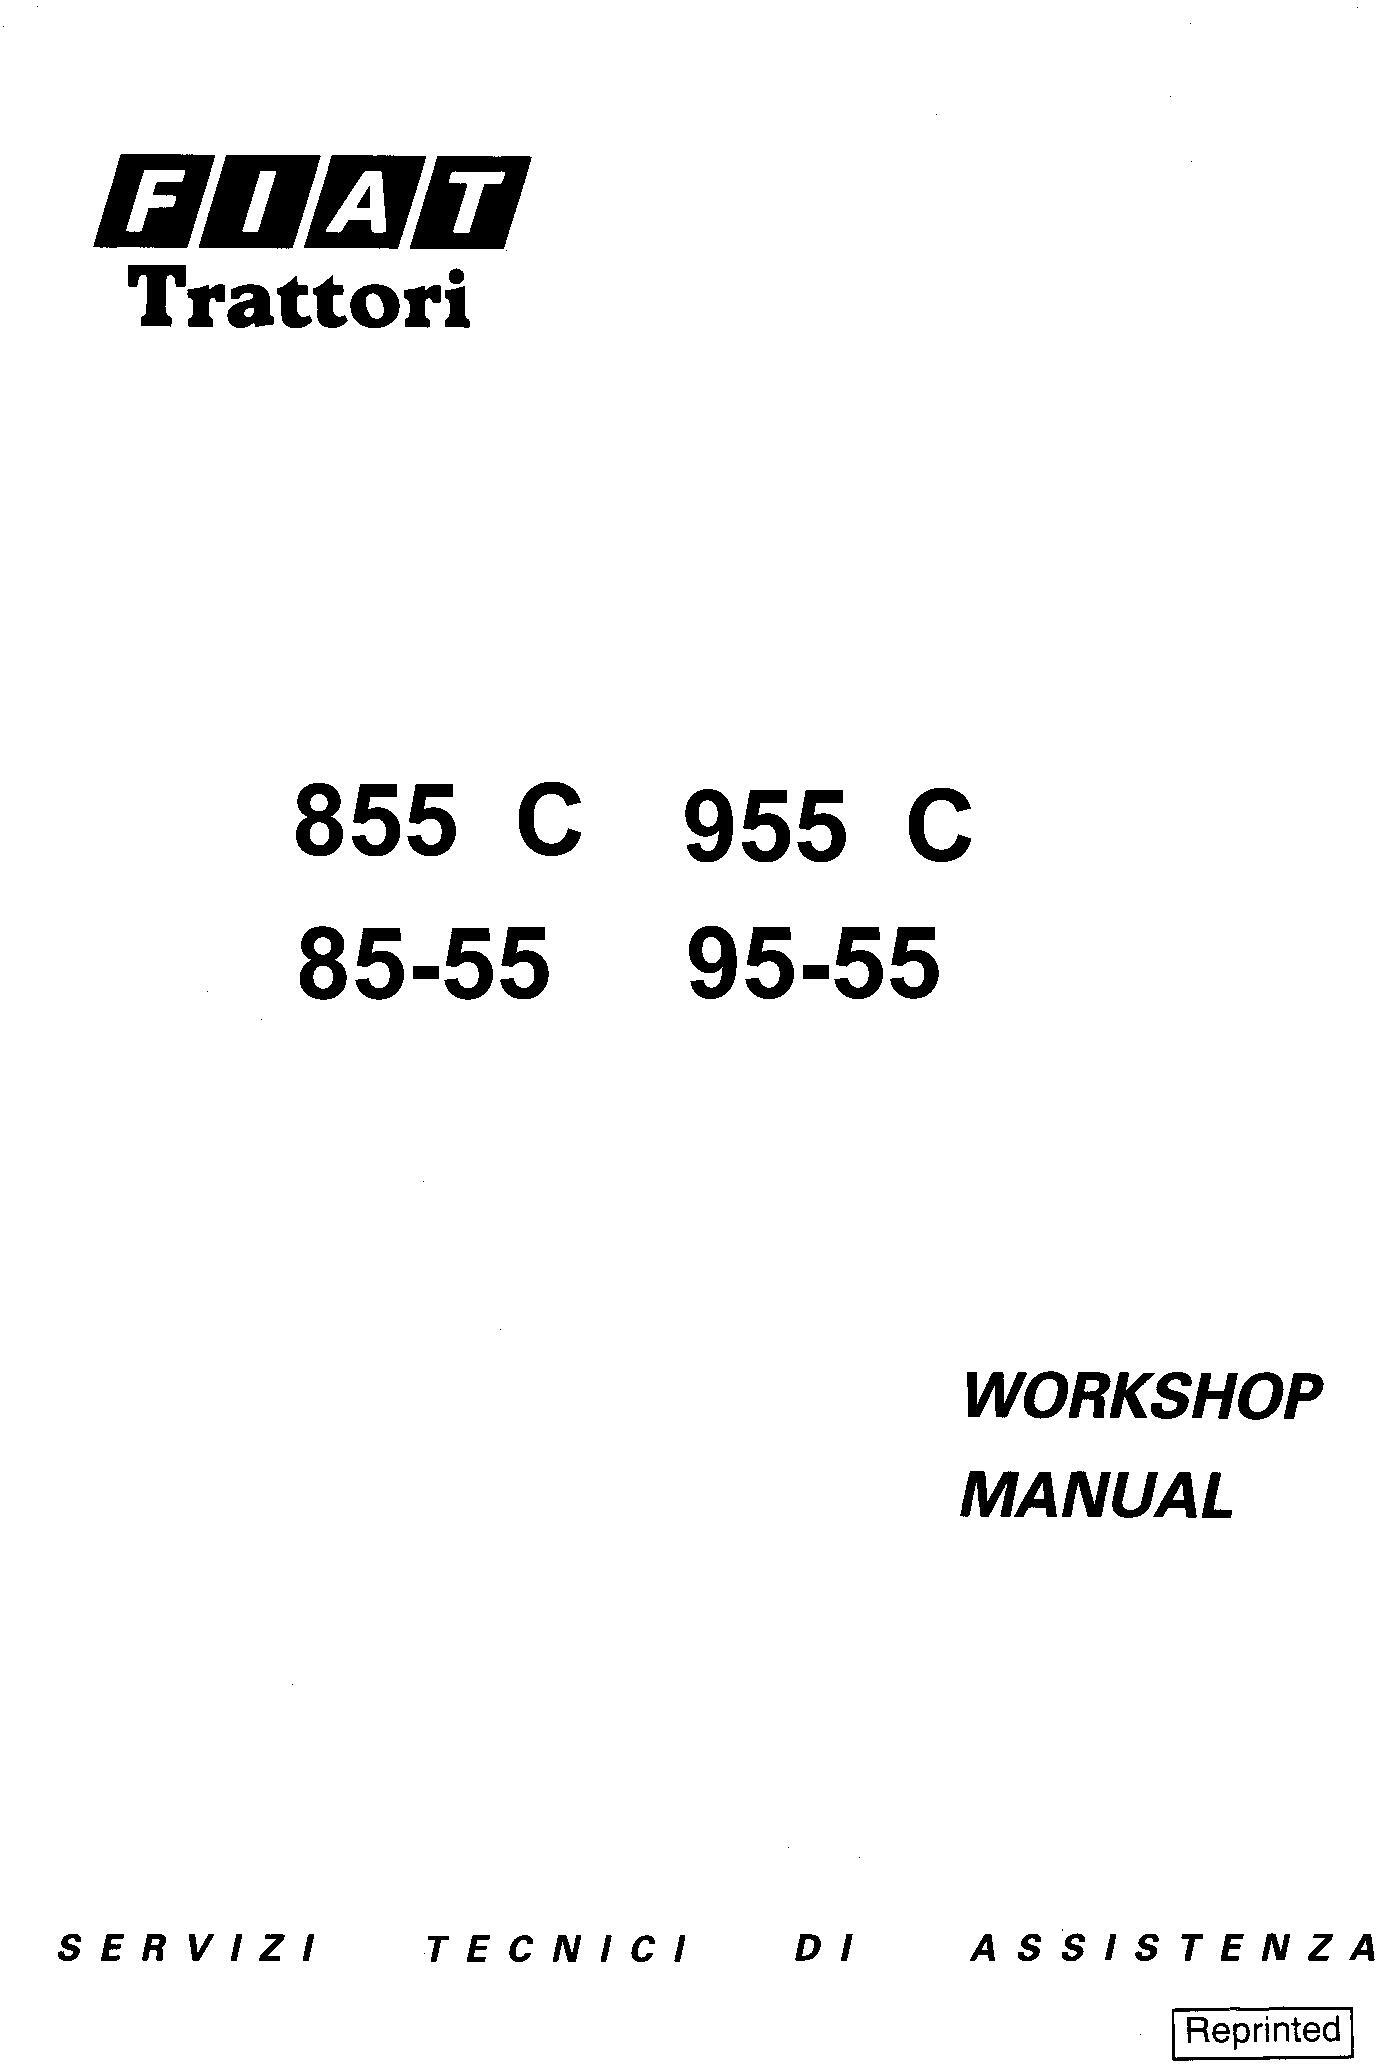 Fiat 855C, 955C, 85-55, 95-55 Crawler Tractor Workshop Service Manual (6035425600) - 19928